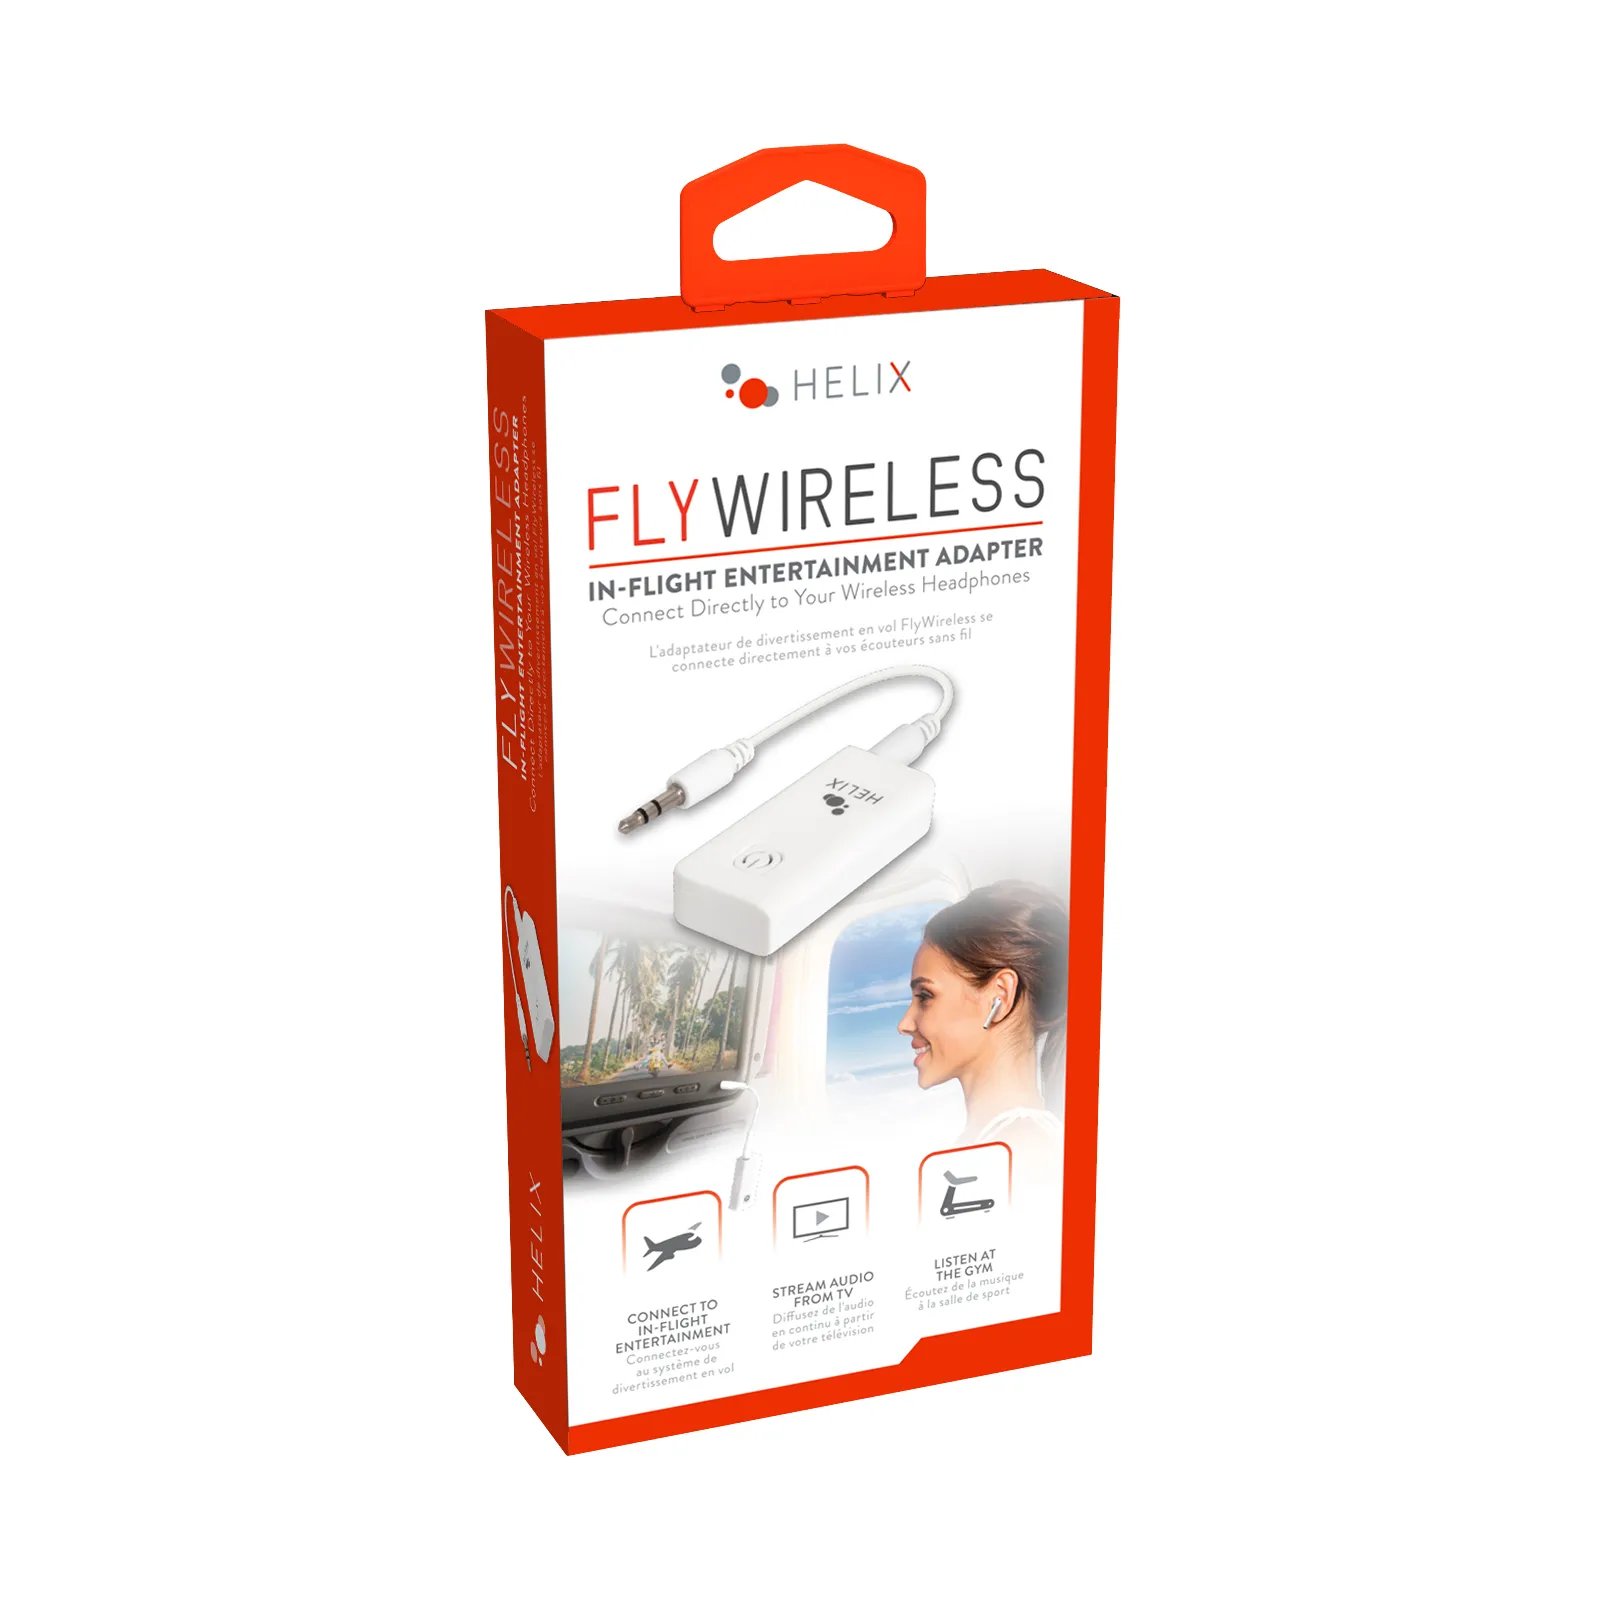 FlyWireless Bluetooth Airplane Adapter – Helix